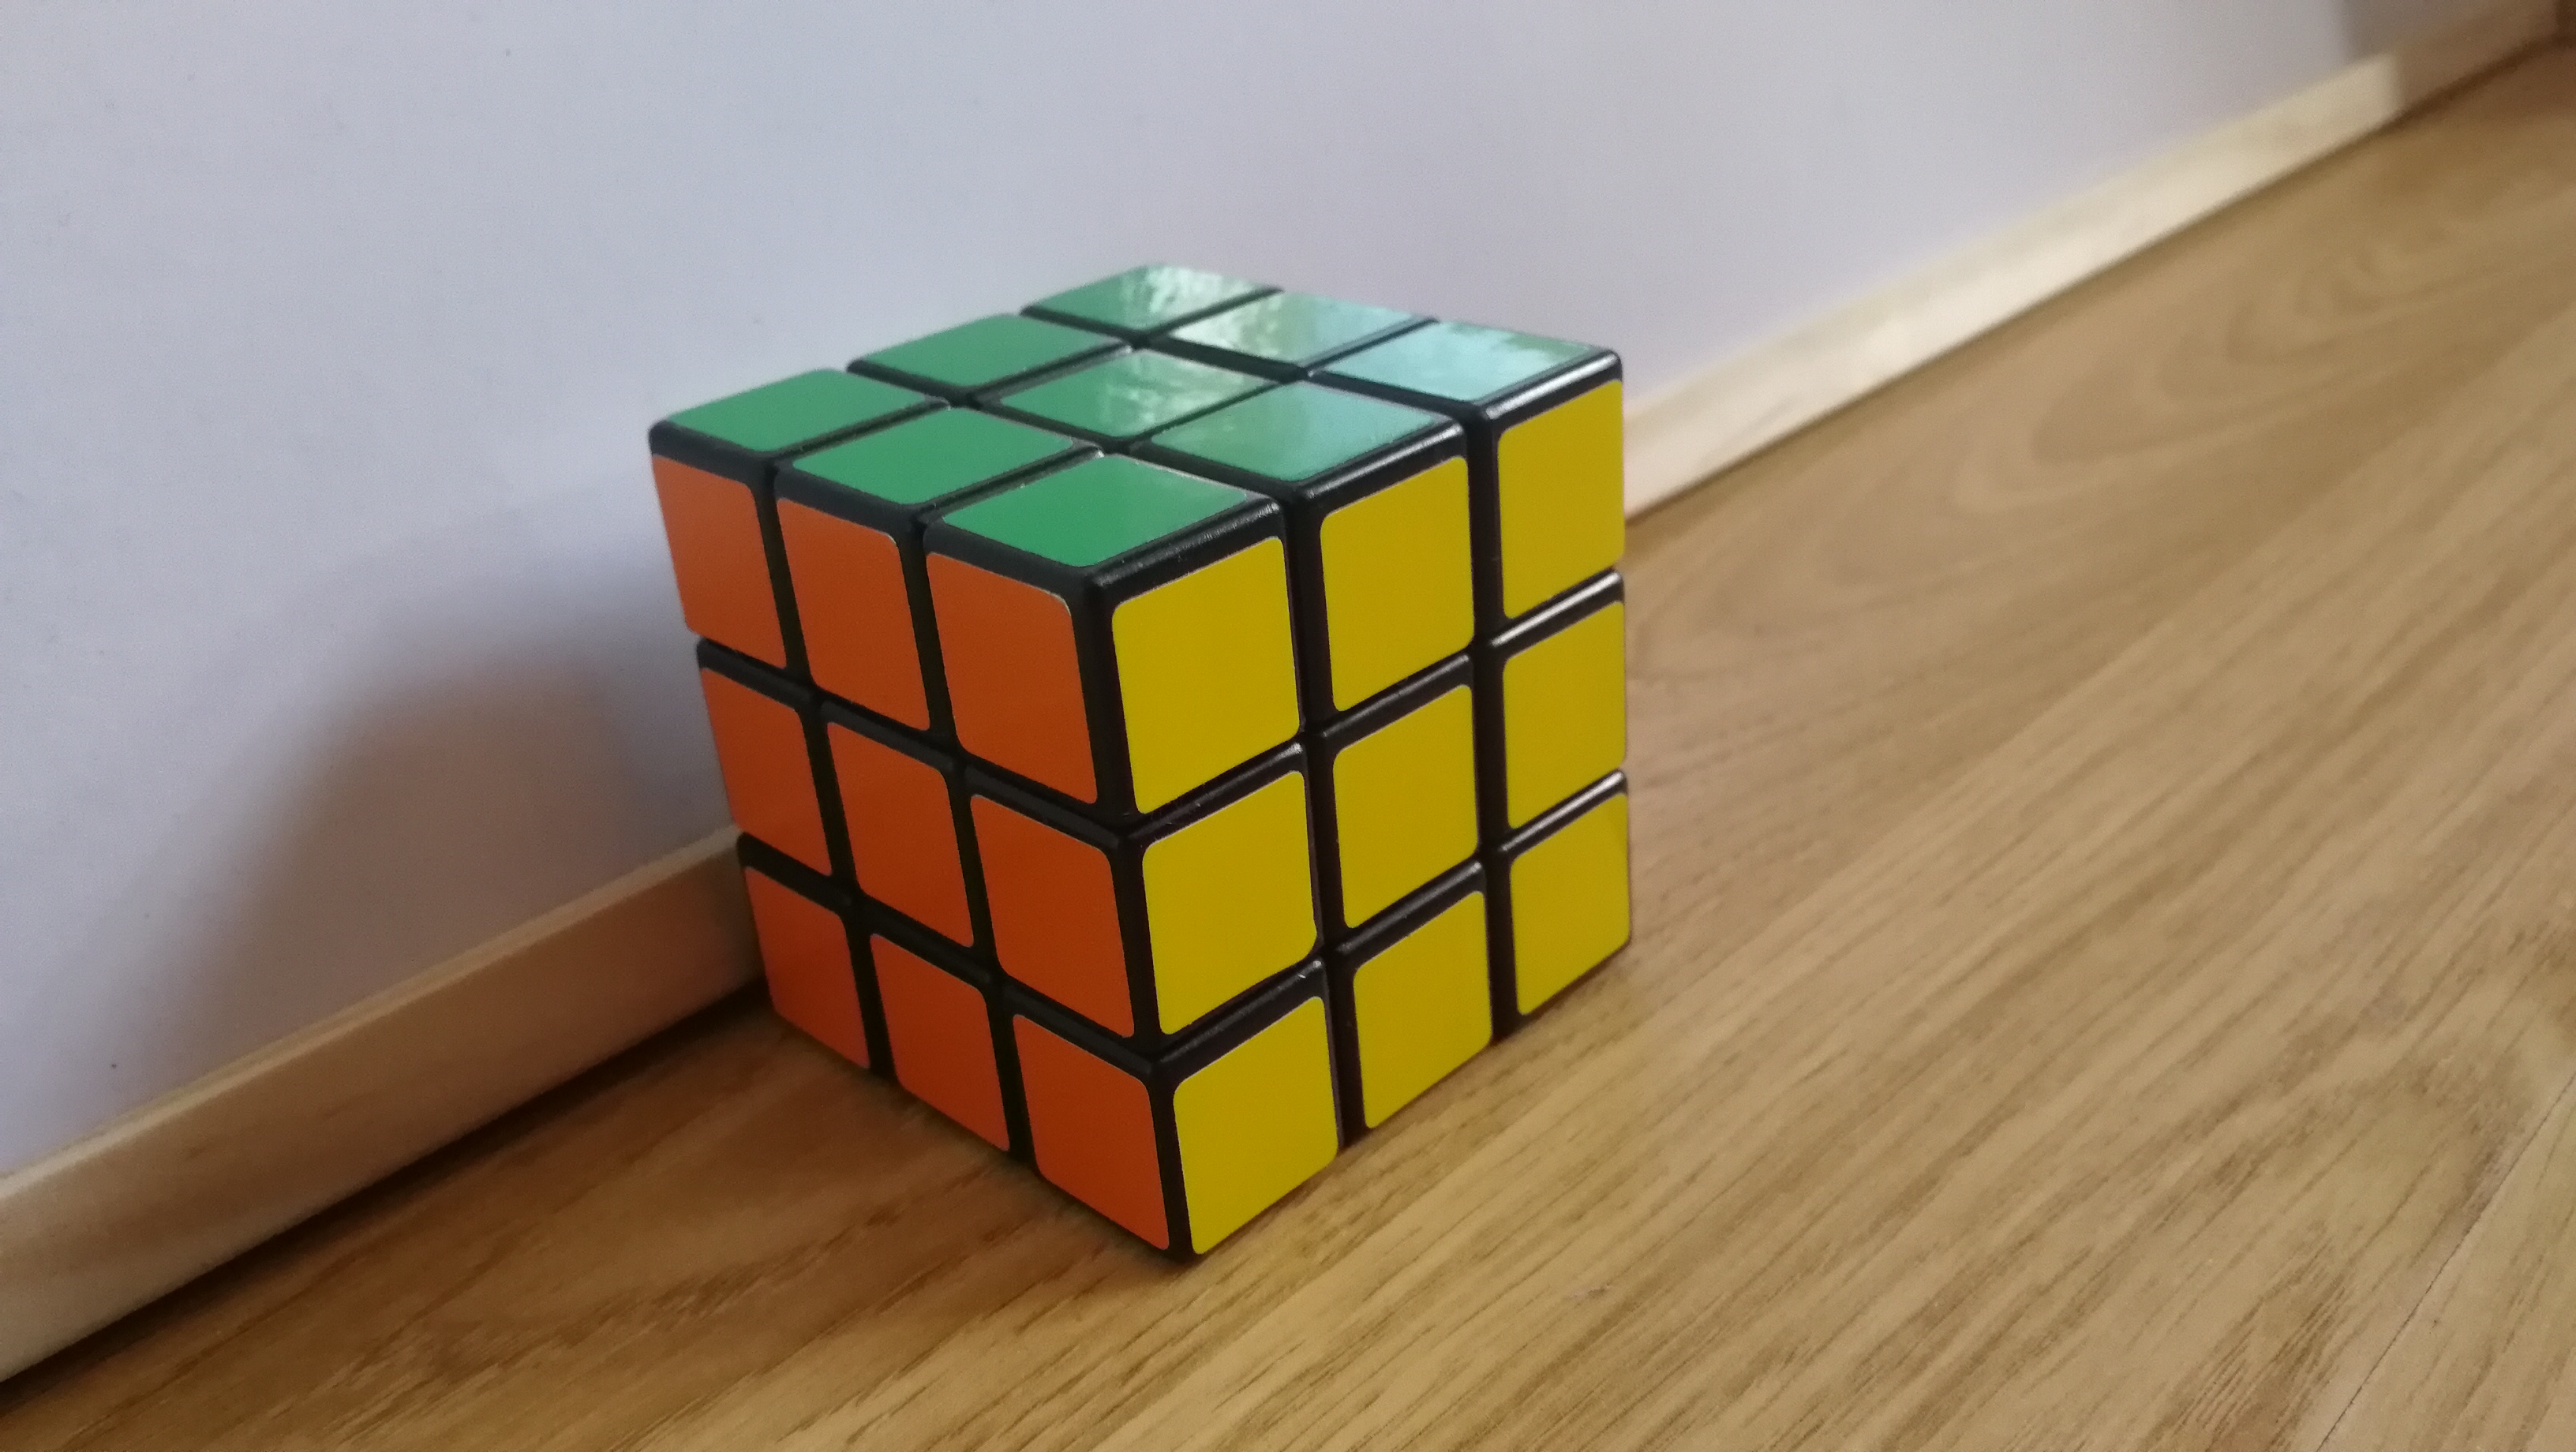 A Rubiks Cube